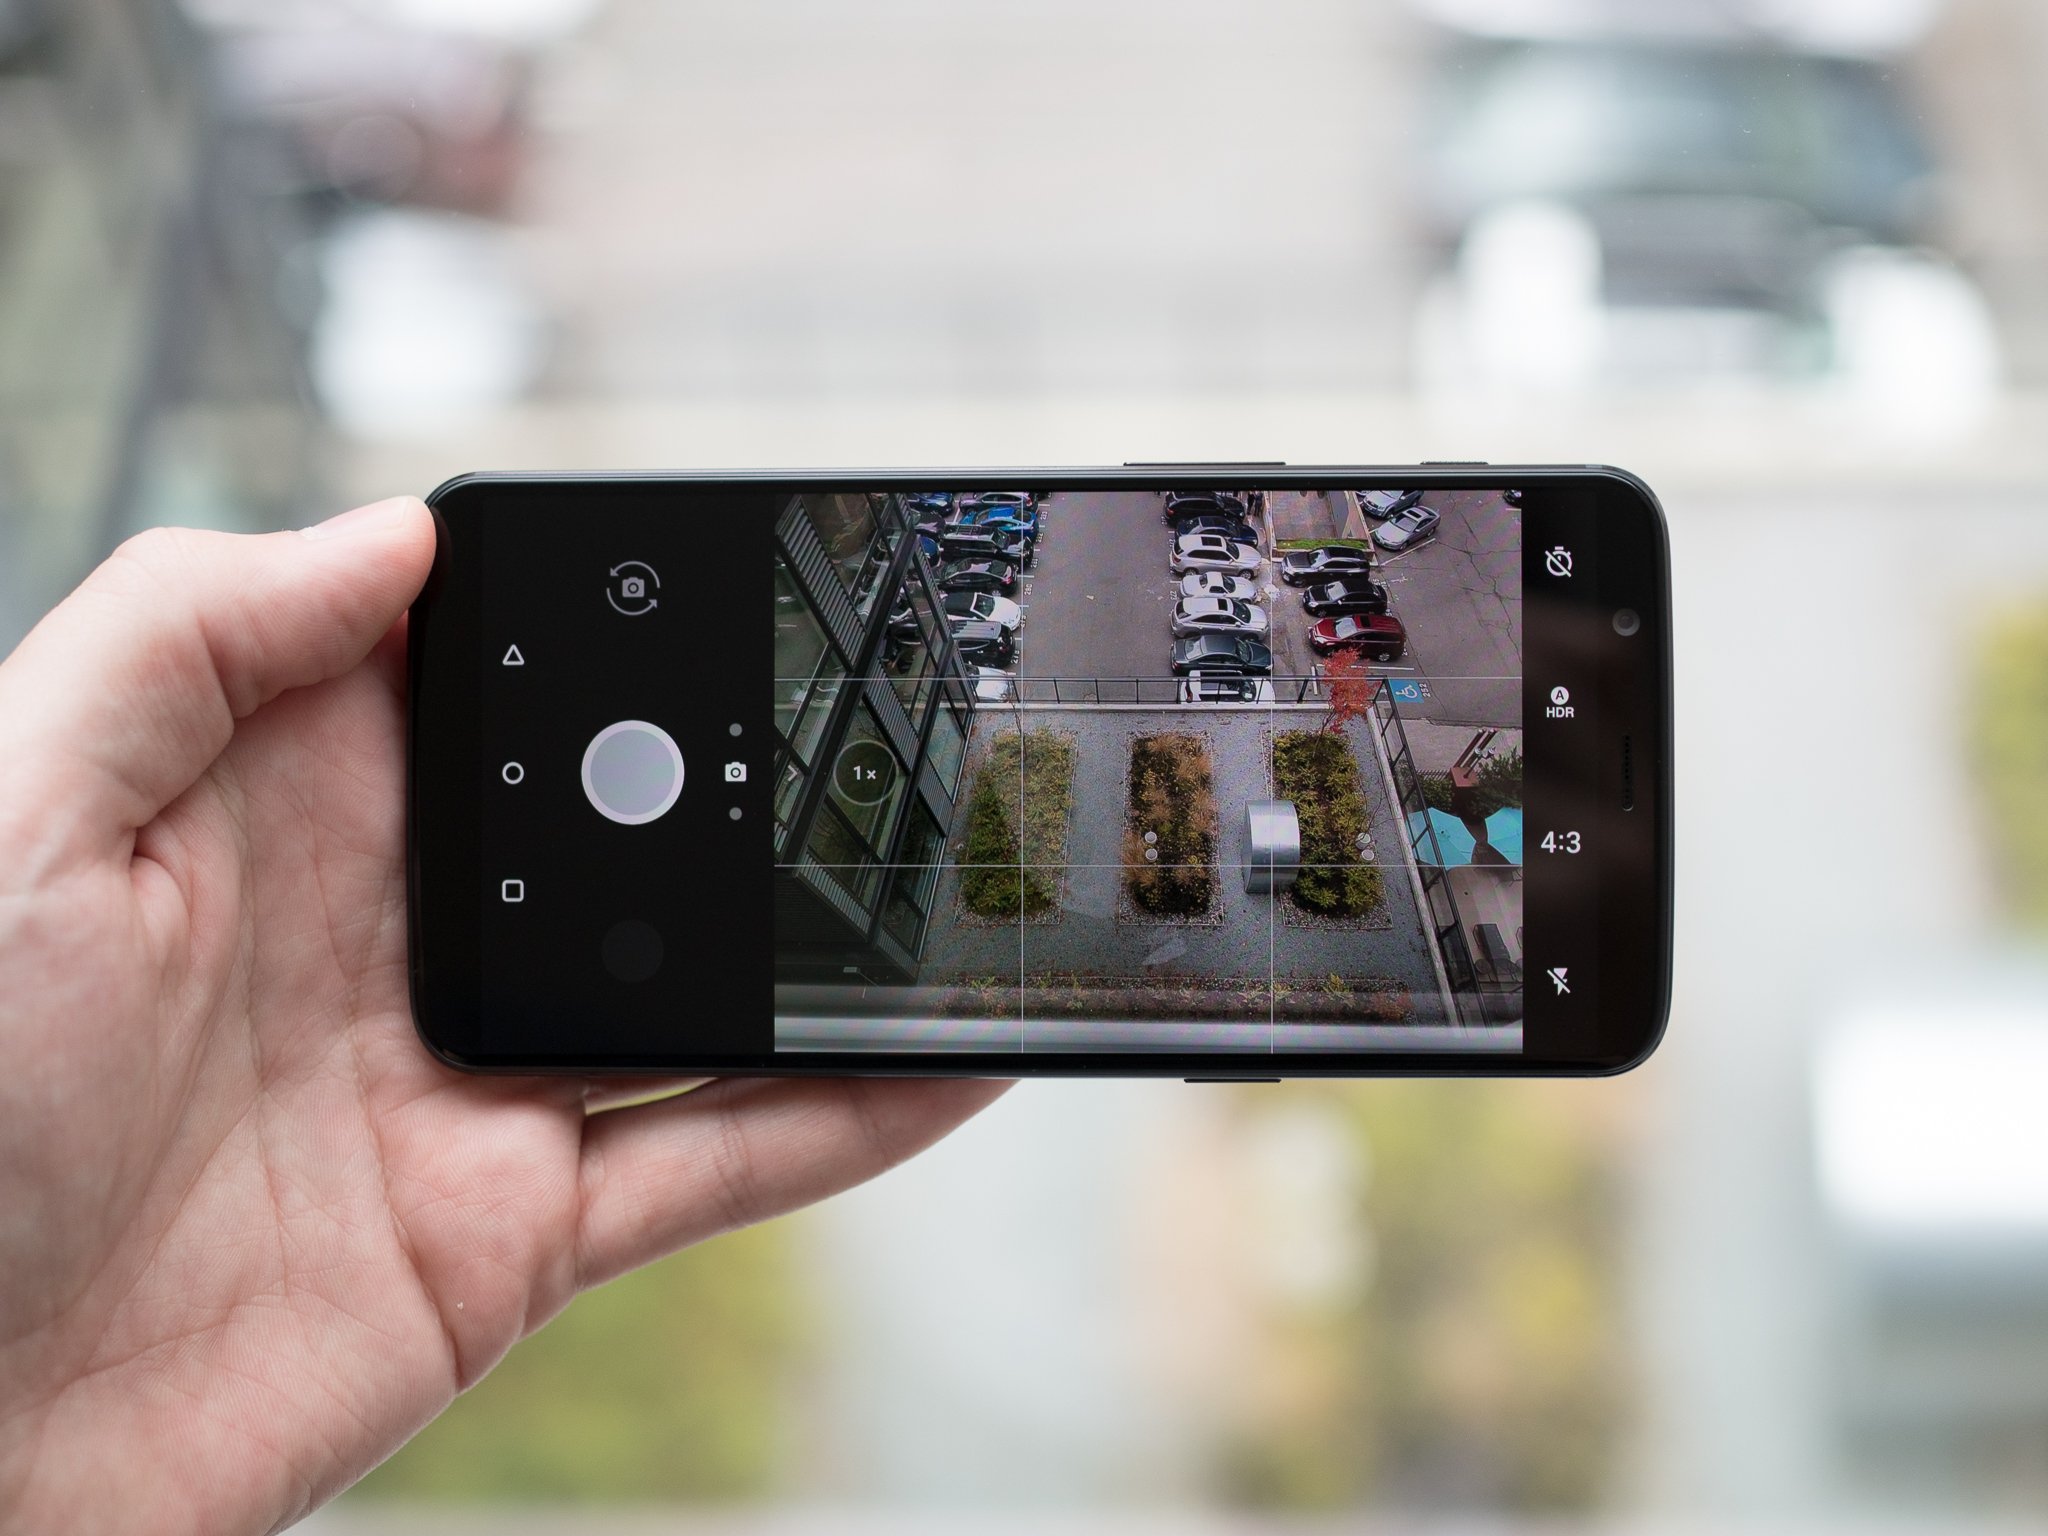 OnePlus 5T camera viewfinder